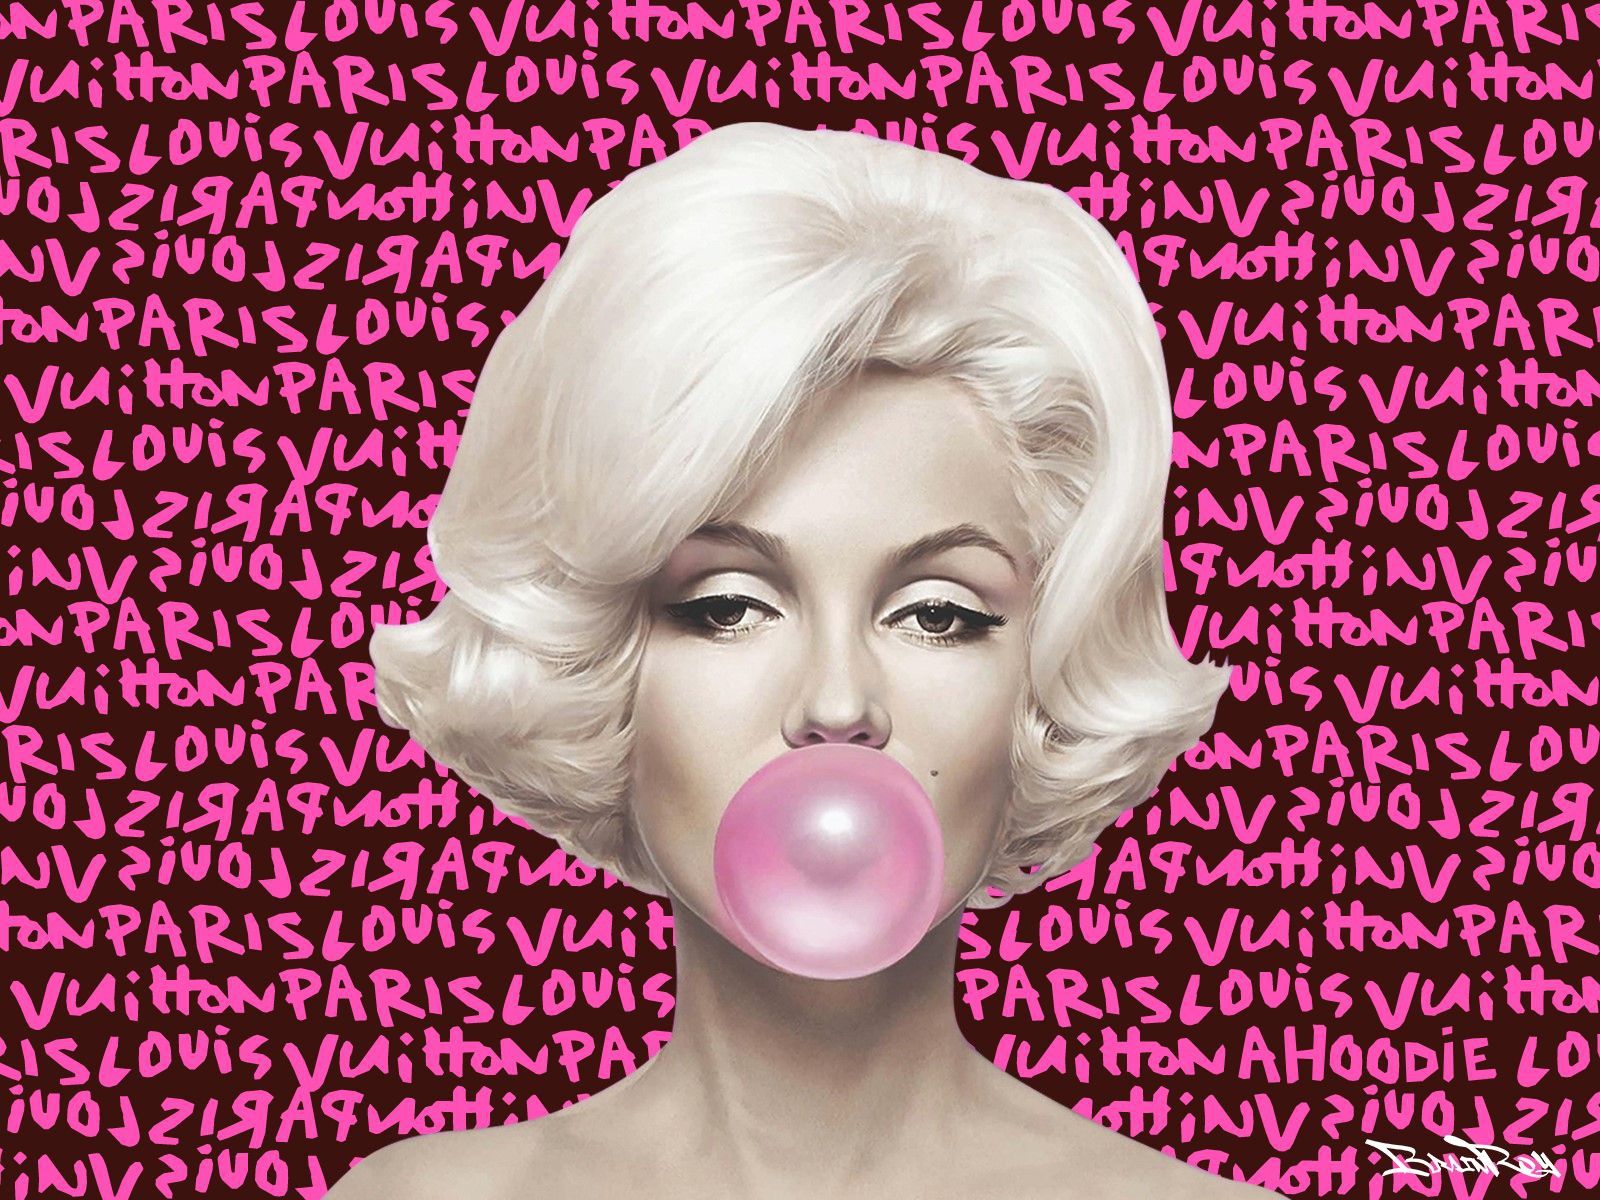 Null BRAIN ROY (MR&ROY, Born in 1980) 

Marilyn Balloon Louis Vuitton Pink

Digi&hellip;